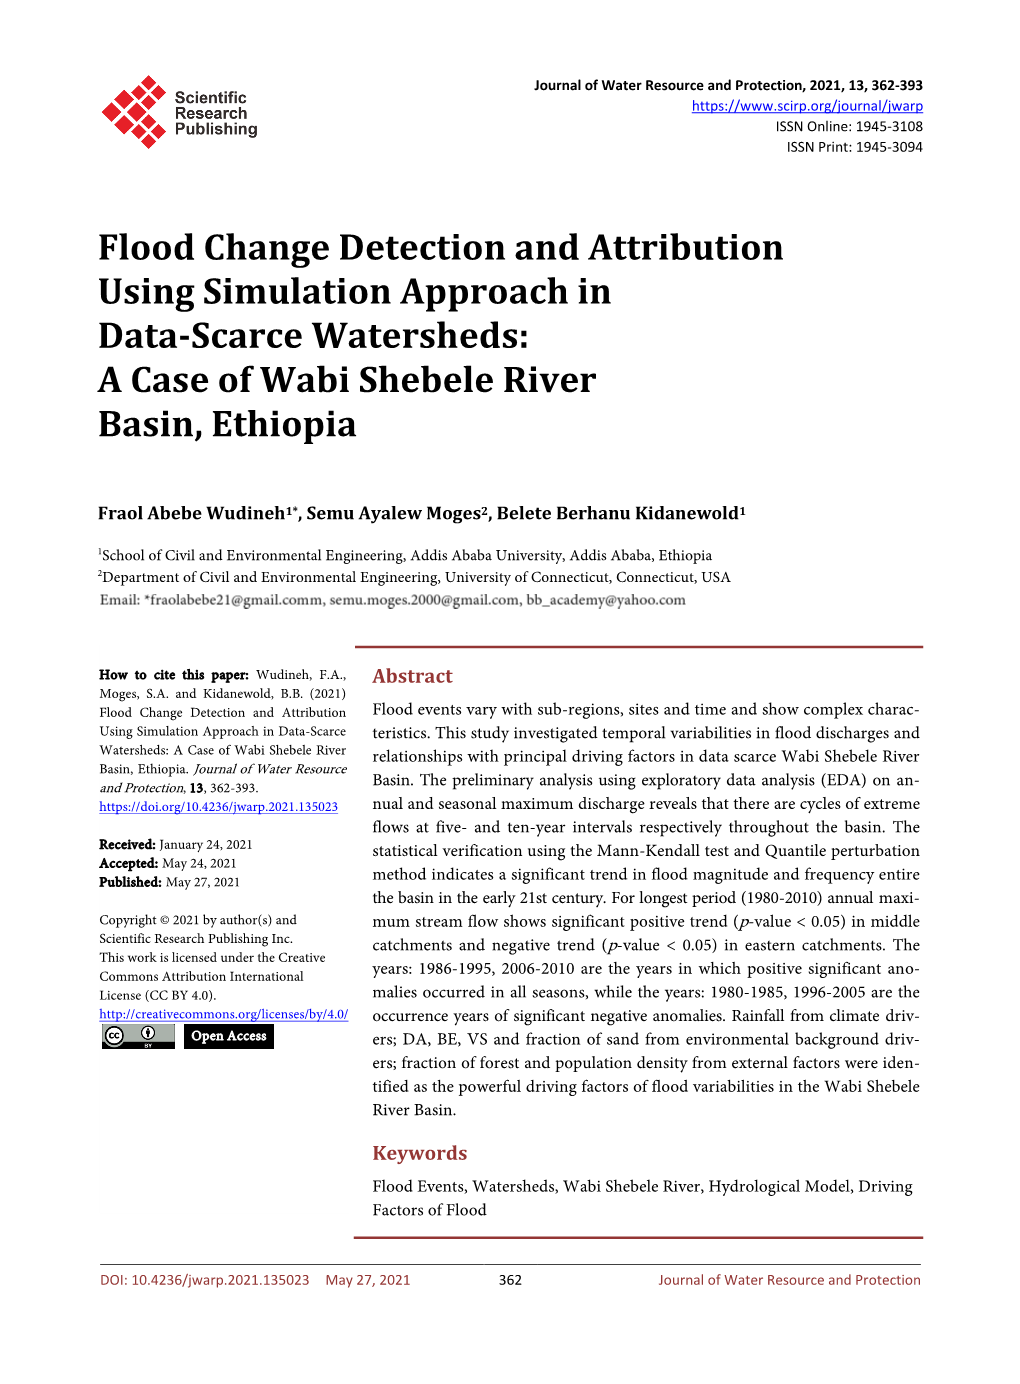 Flood Change Detection and Attributionusing Simulation